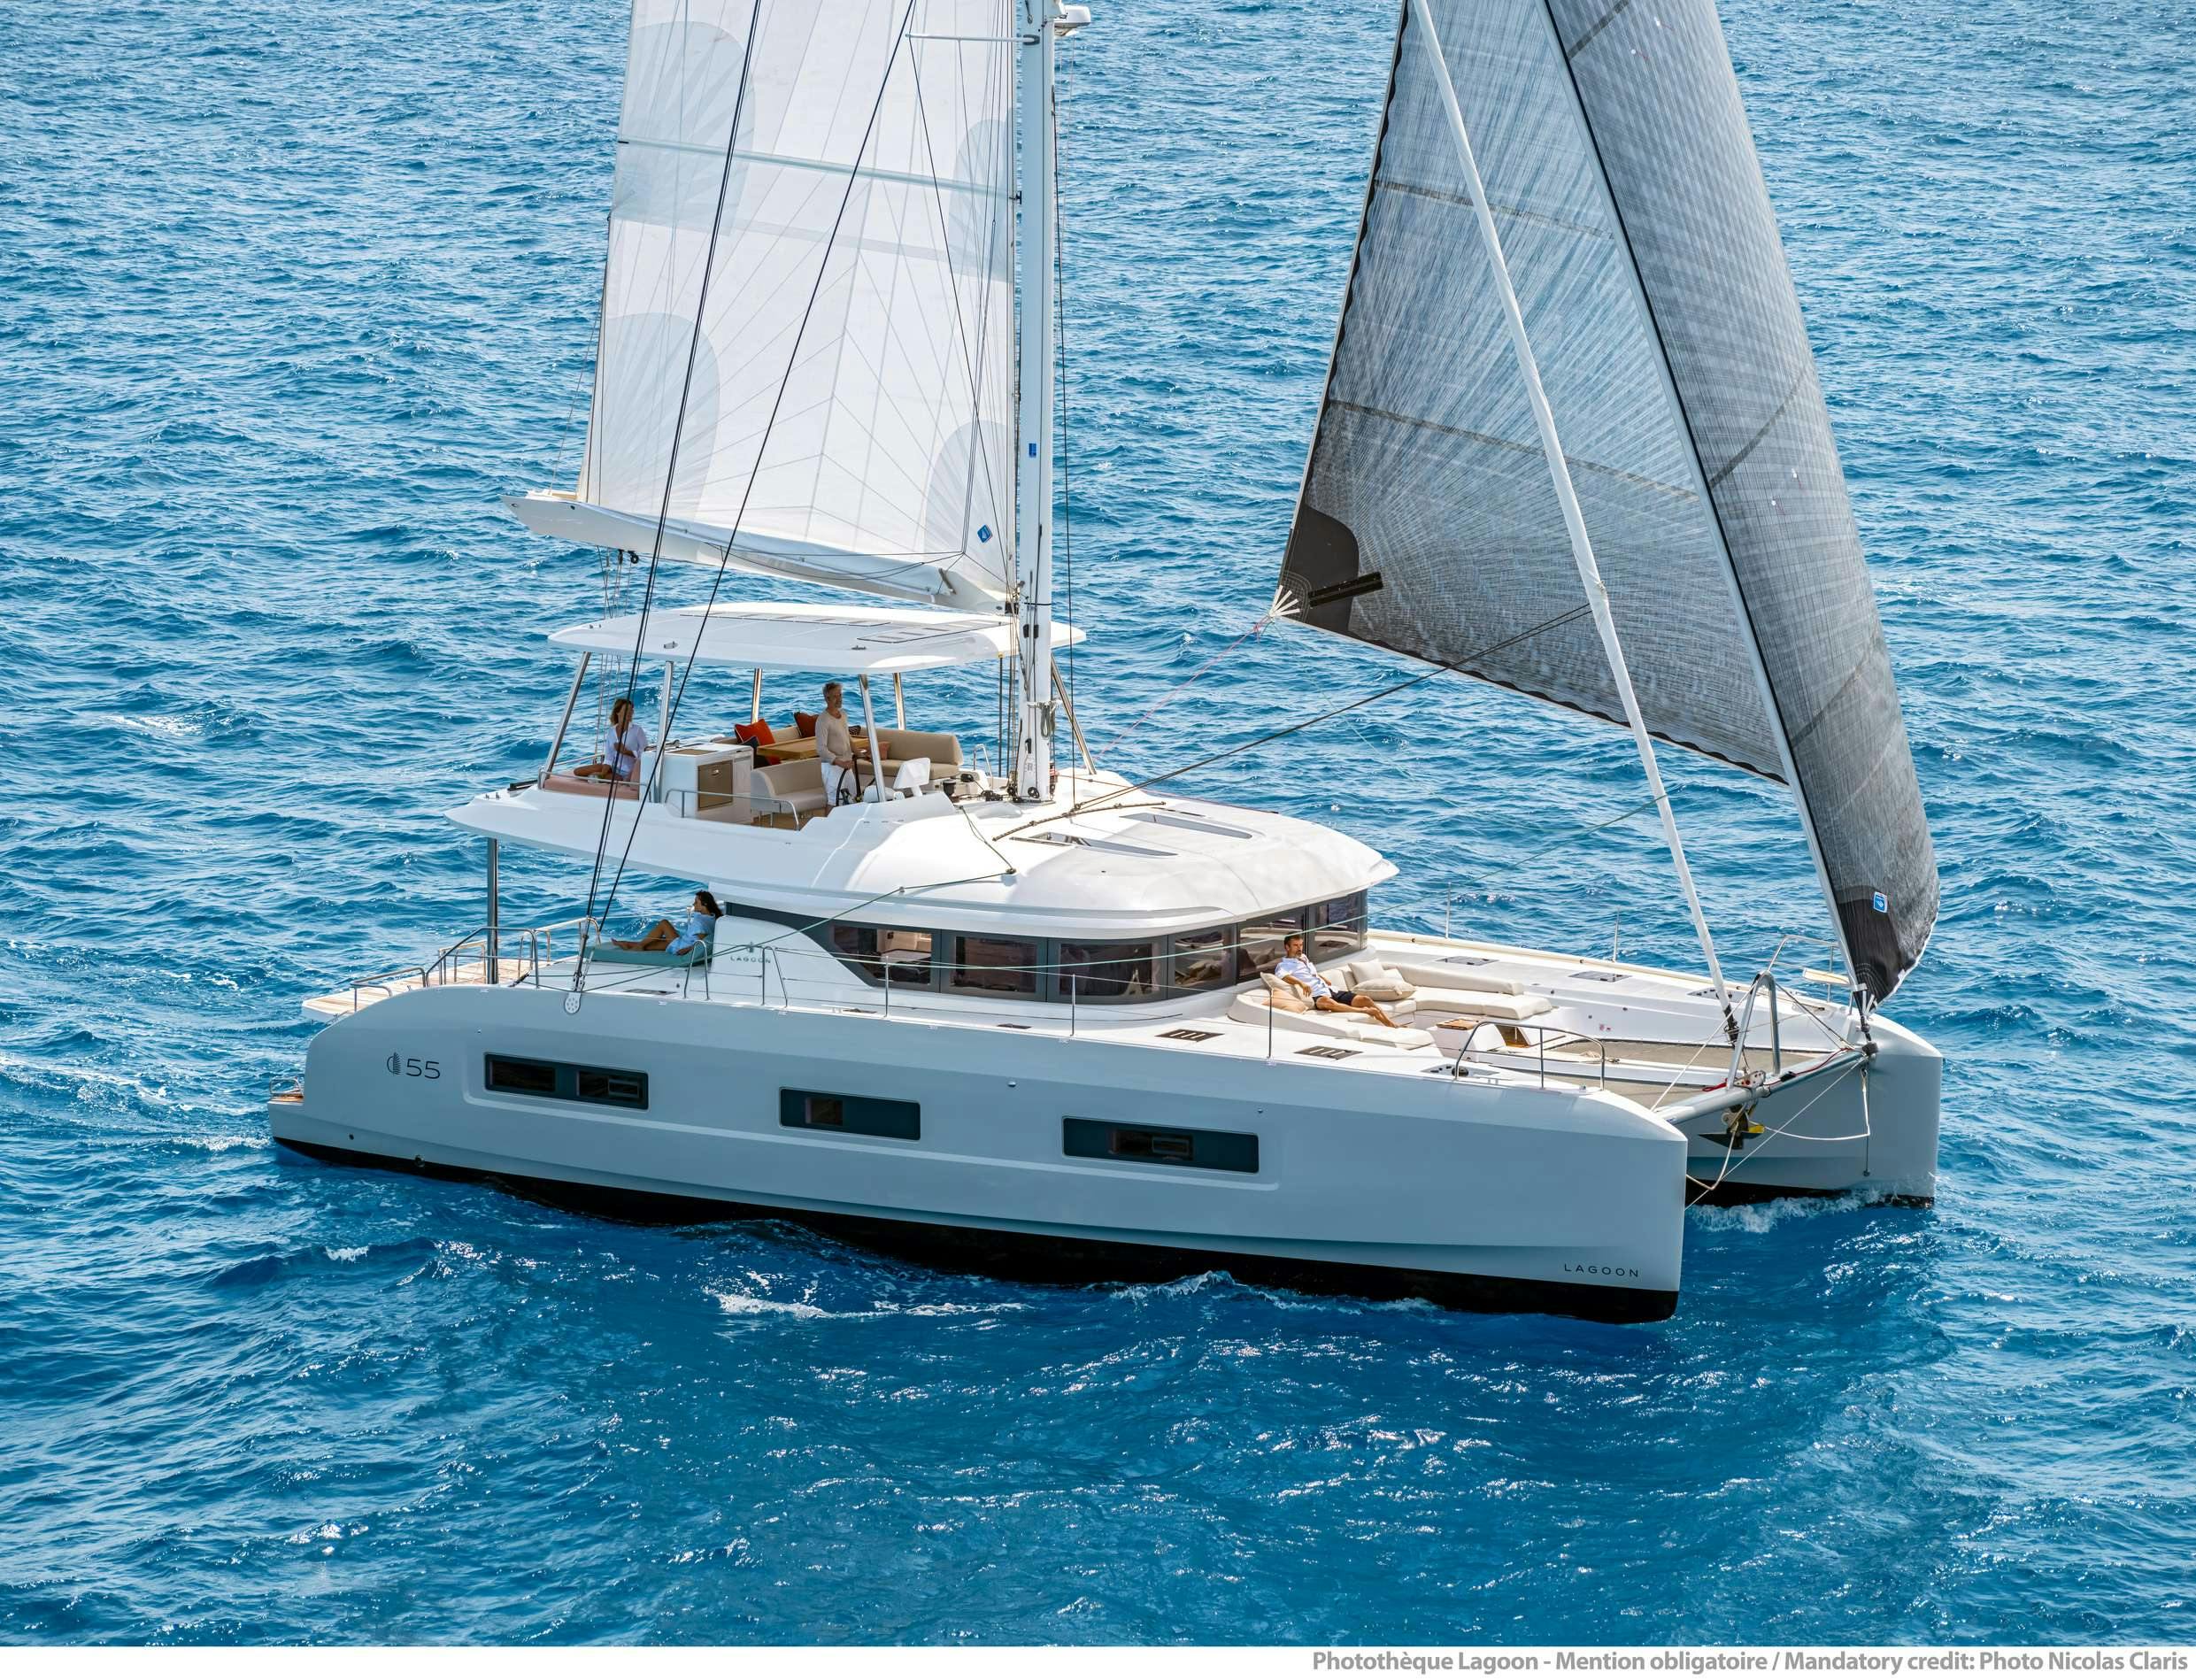 VALIUM 55 - Yacht Charter Sami & Boat hire in Greece 1